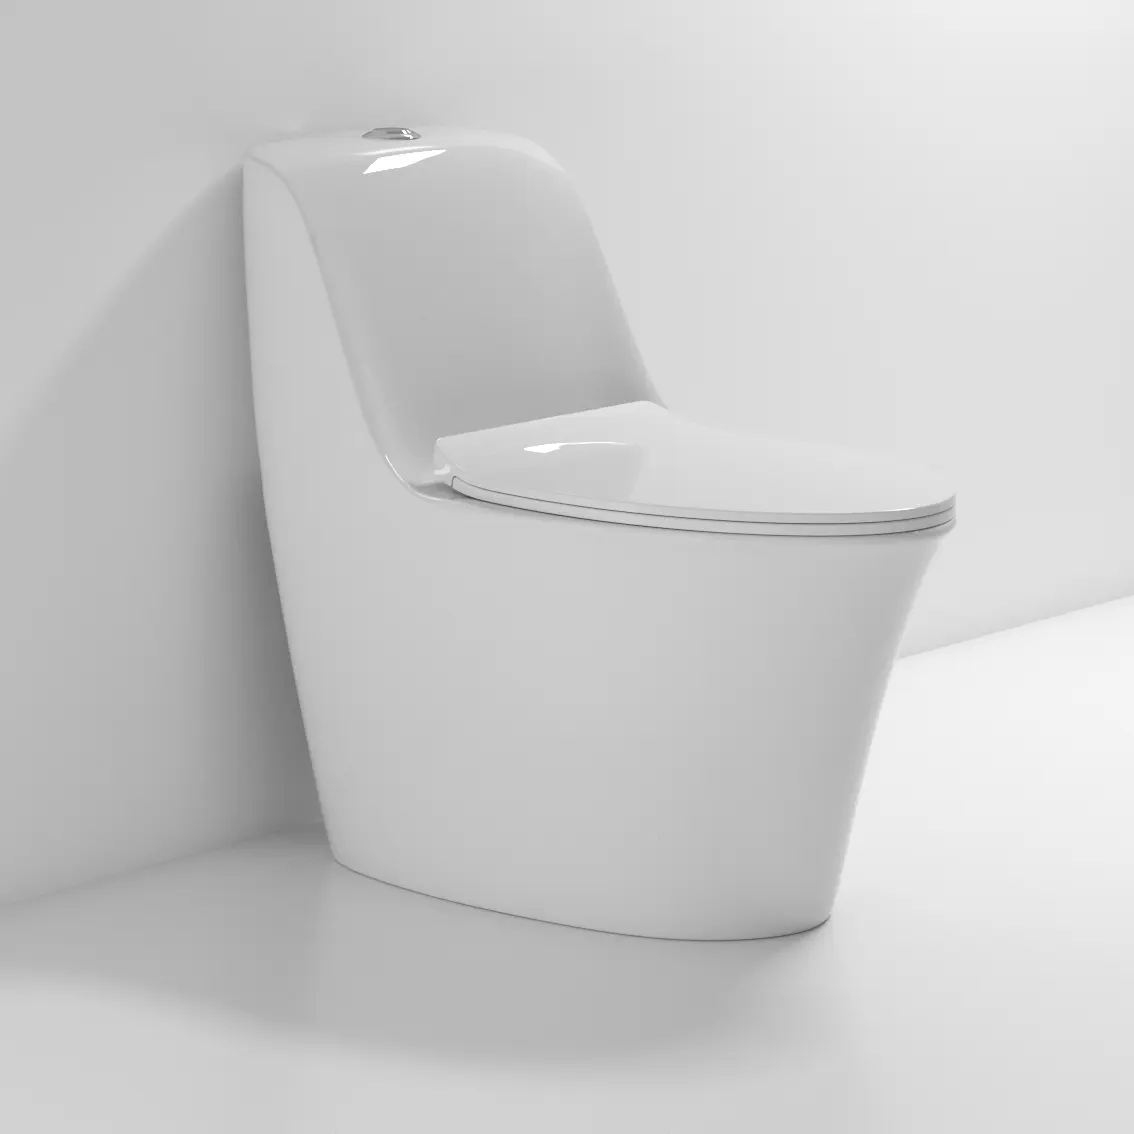 नैनो ग्लेज नए मॉडल हॉट सेल लक्जरी सैनिटरी वेयर एक टुकड़ा सस्ता चीनी wc के ट्रैप सिफोन फ्लशिंग शौचालय यूफ फ्लशिंग टॉयलेट